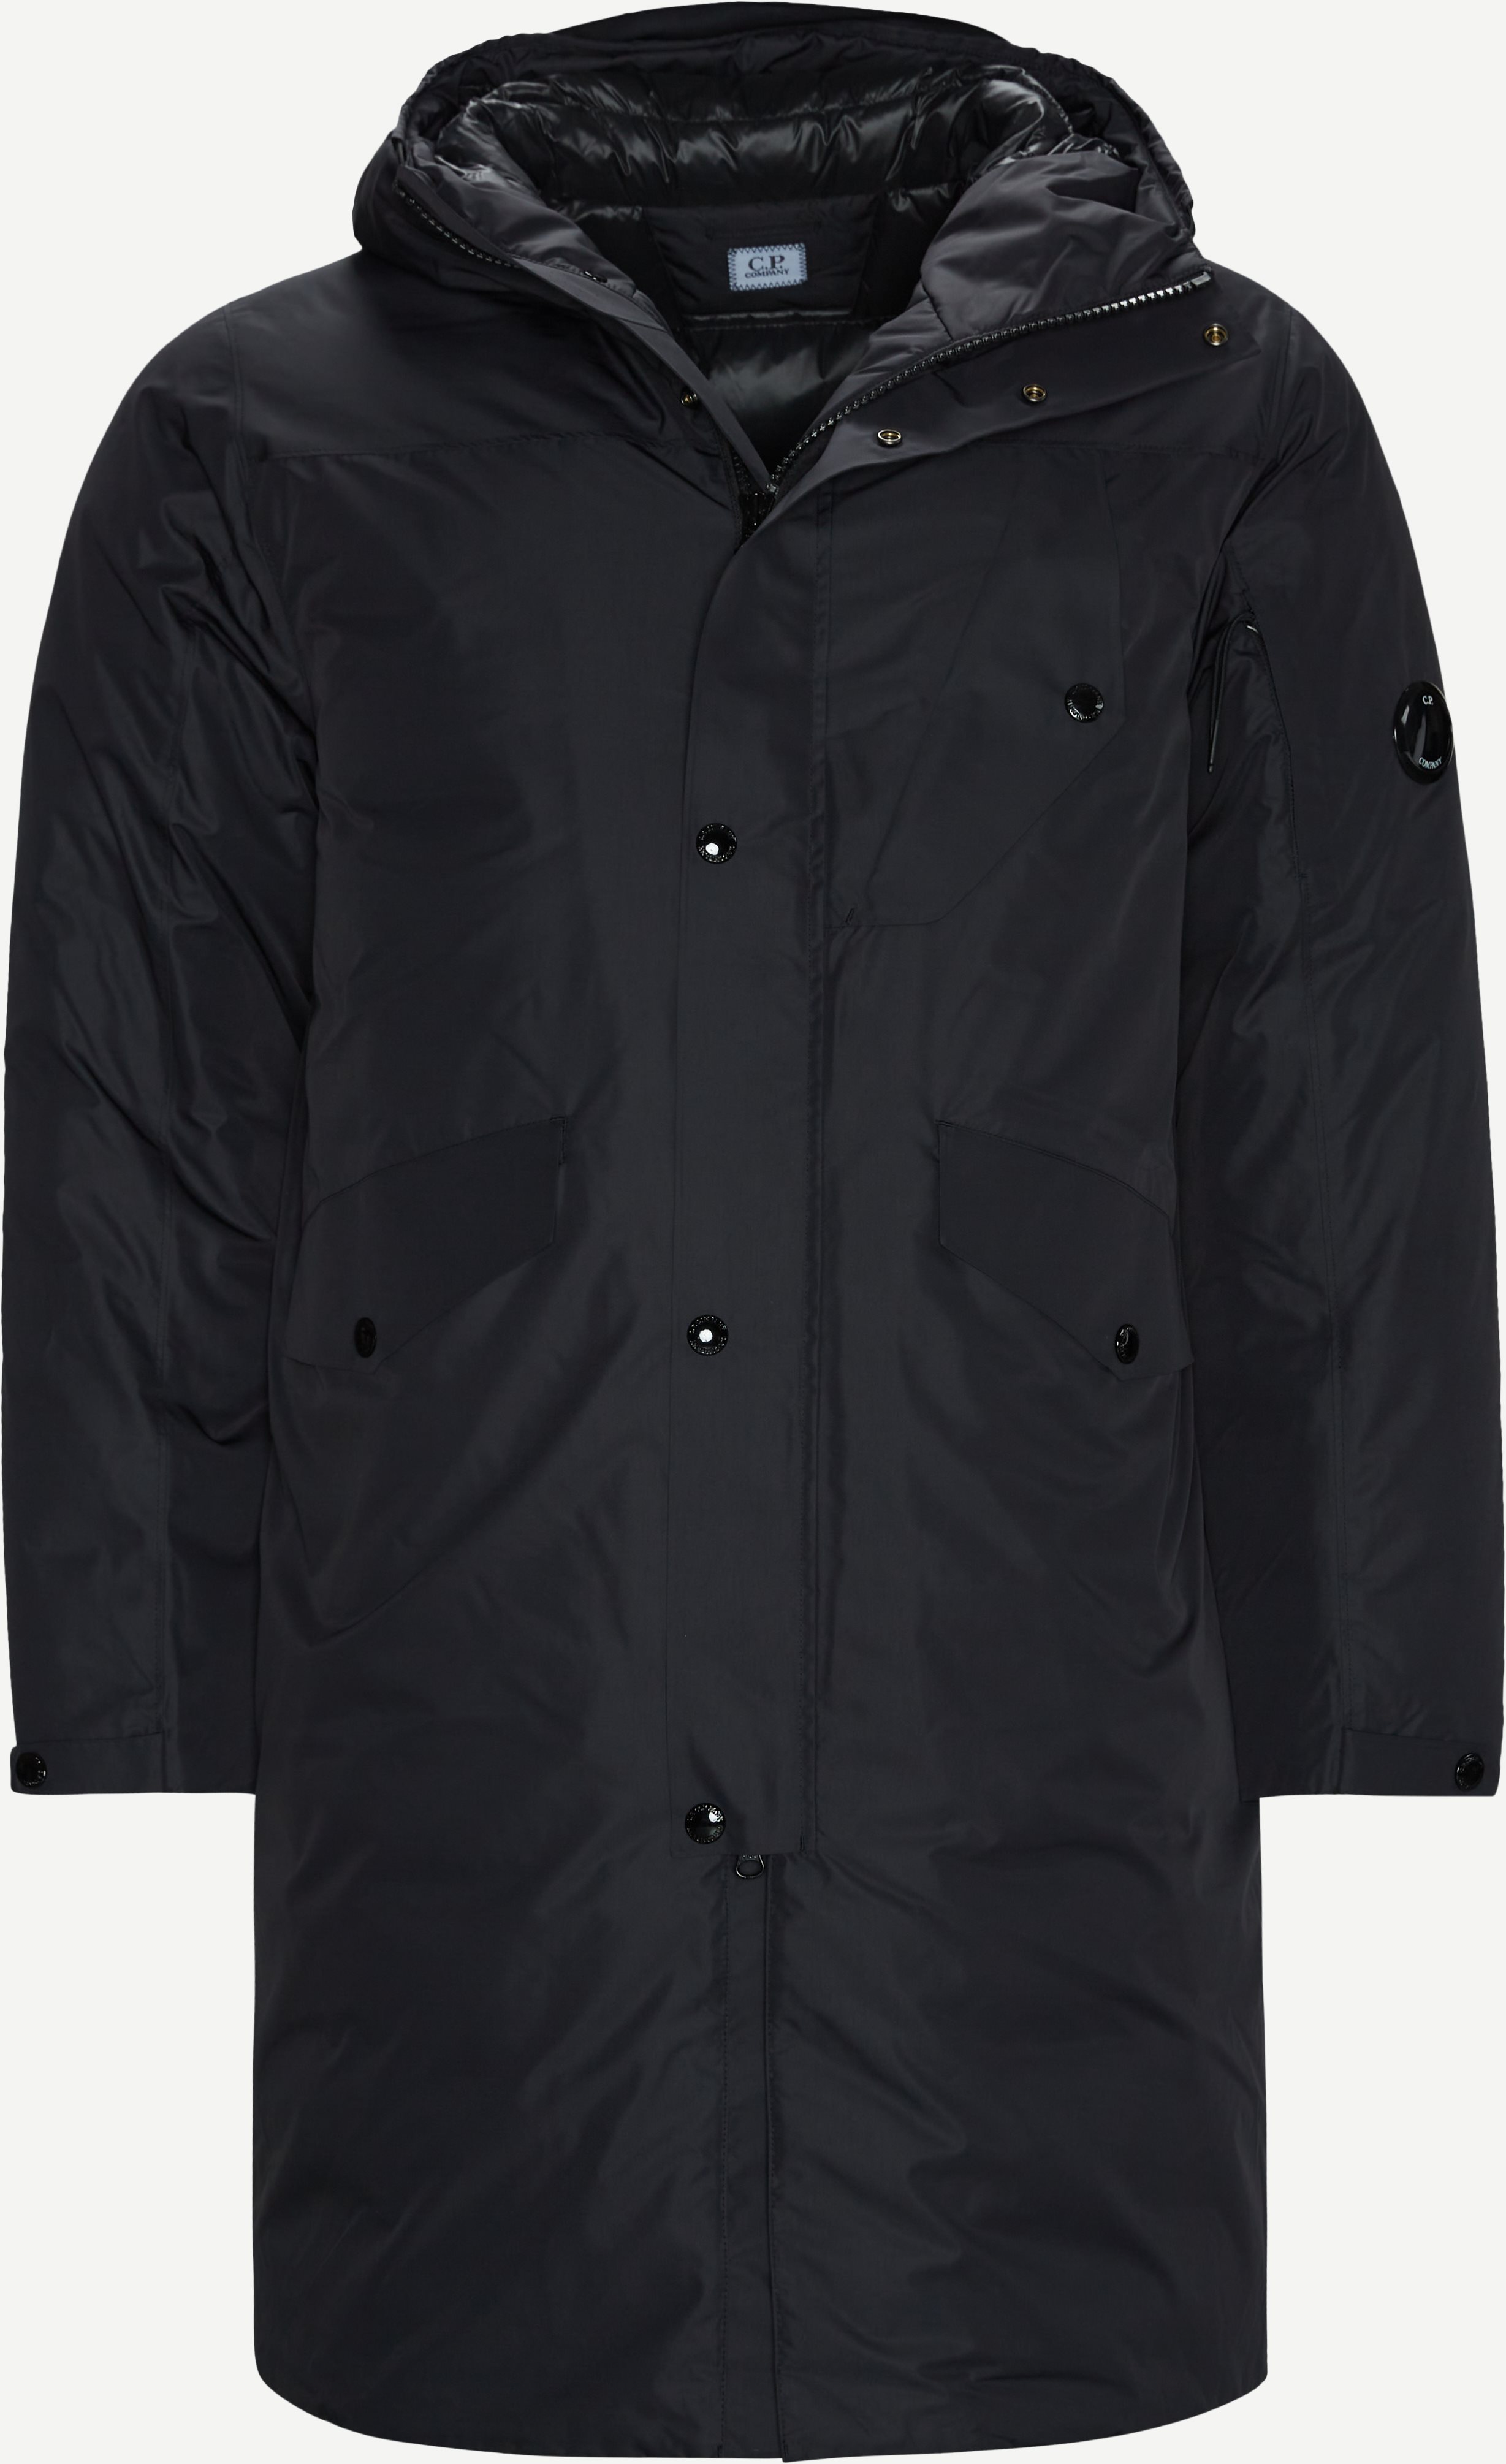 Micro-M Down Jacket - Jackets - Regular fit - Black